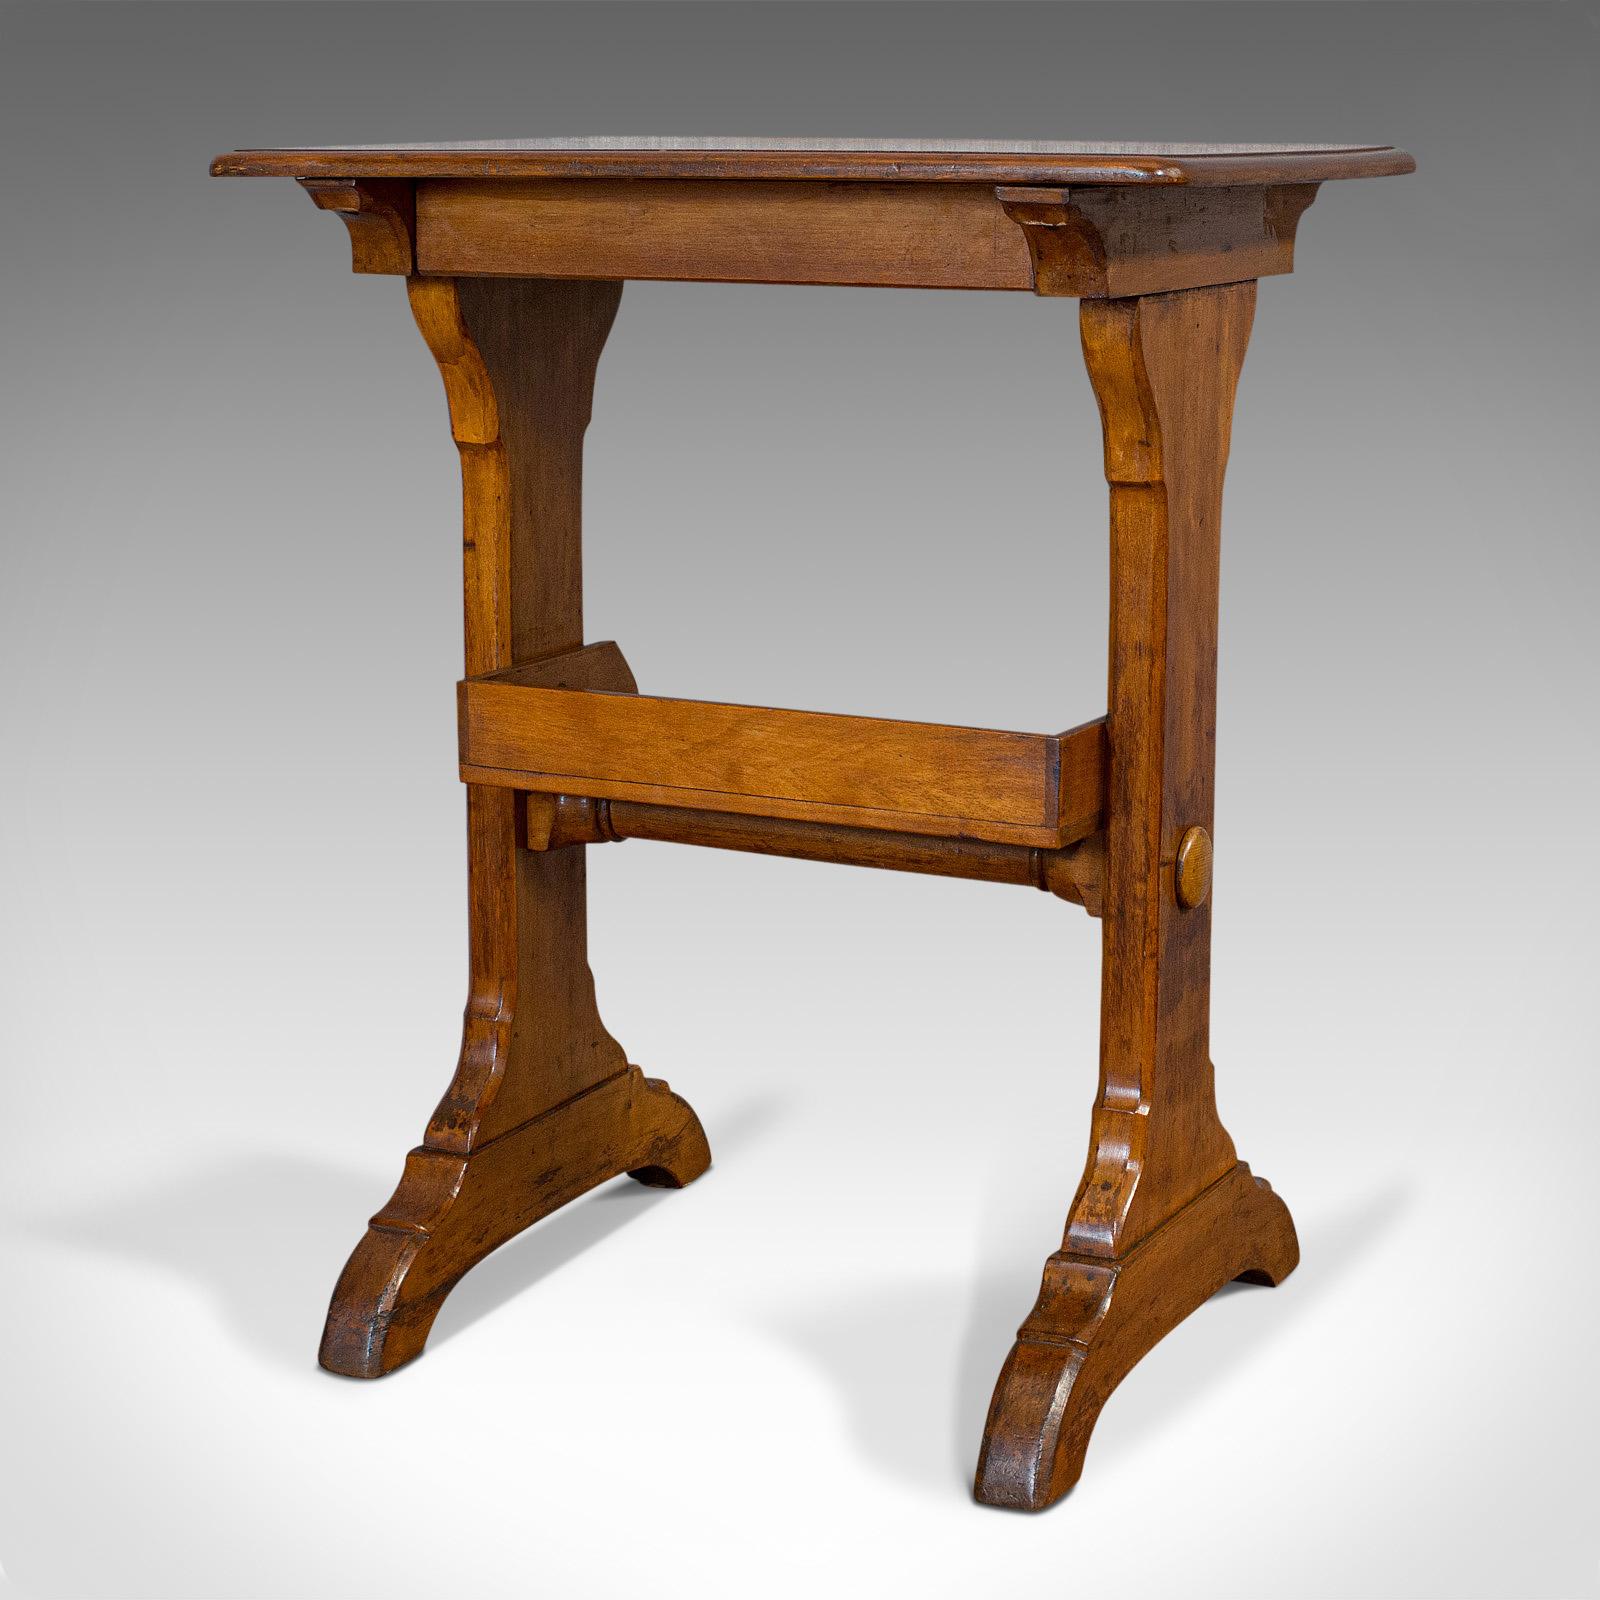 British Antique Craft Table, English, Golden Oak, Side, Writing, Victorian, circa 1880